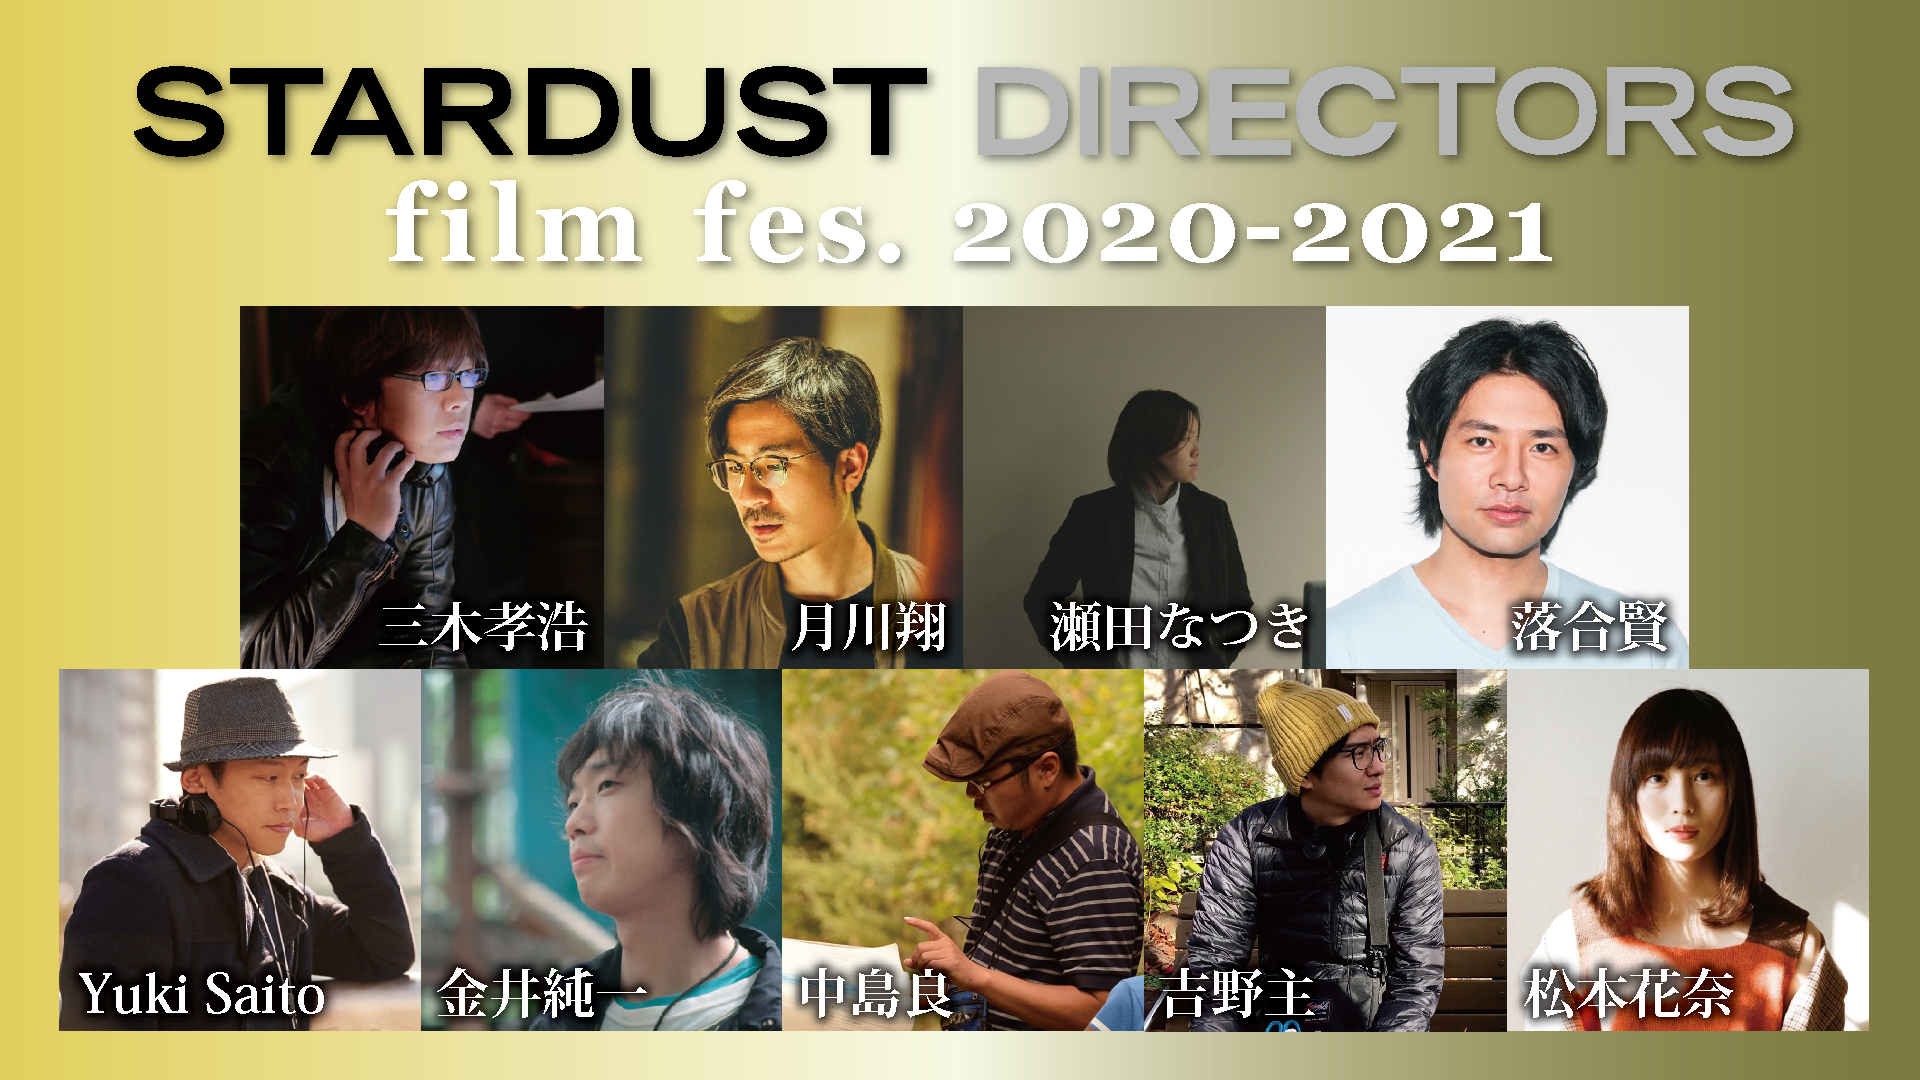 Stardust Director Film Fes